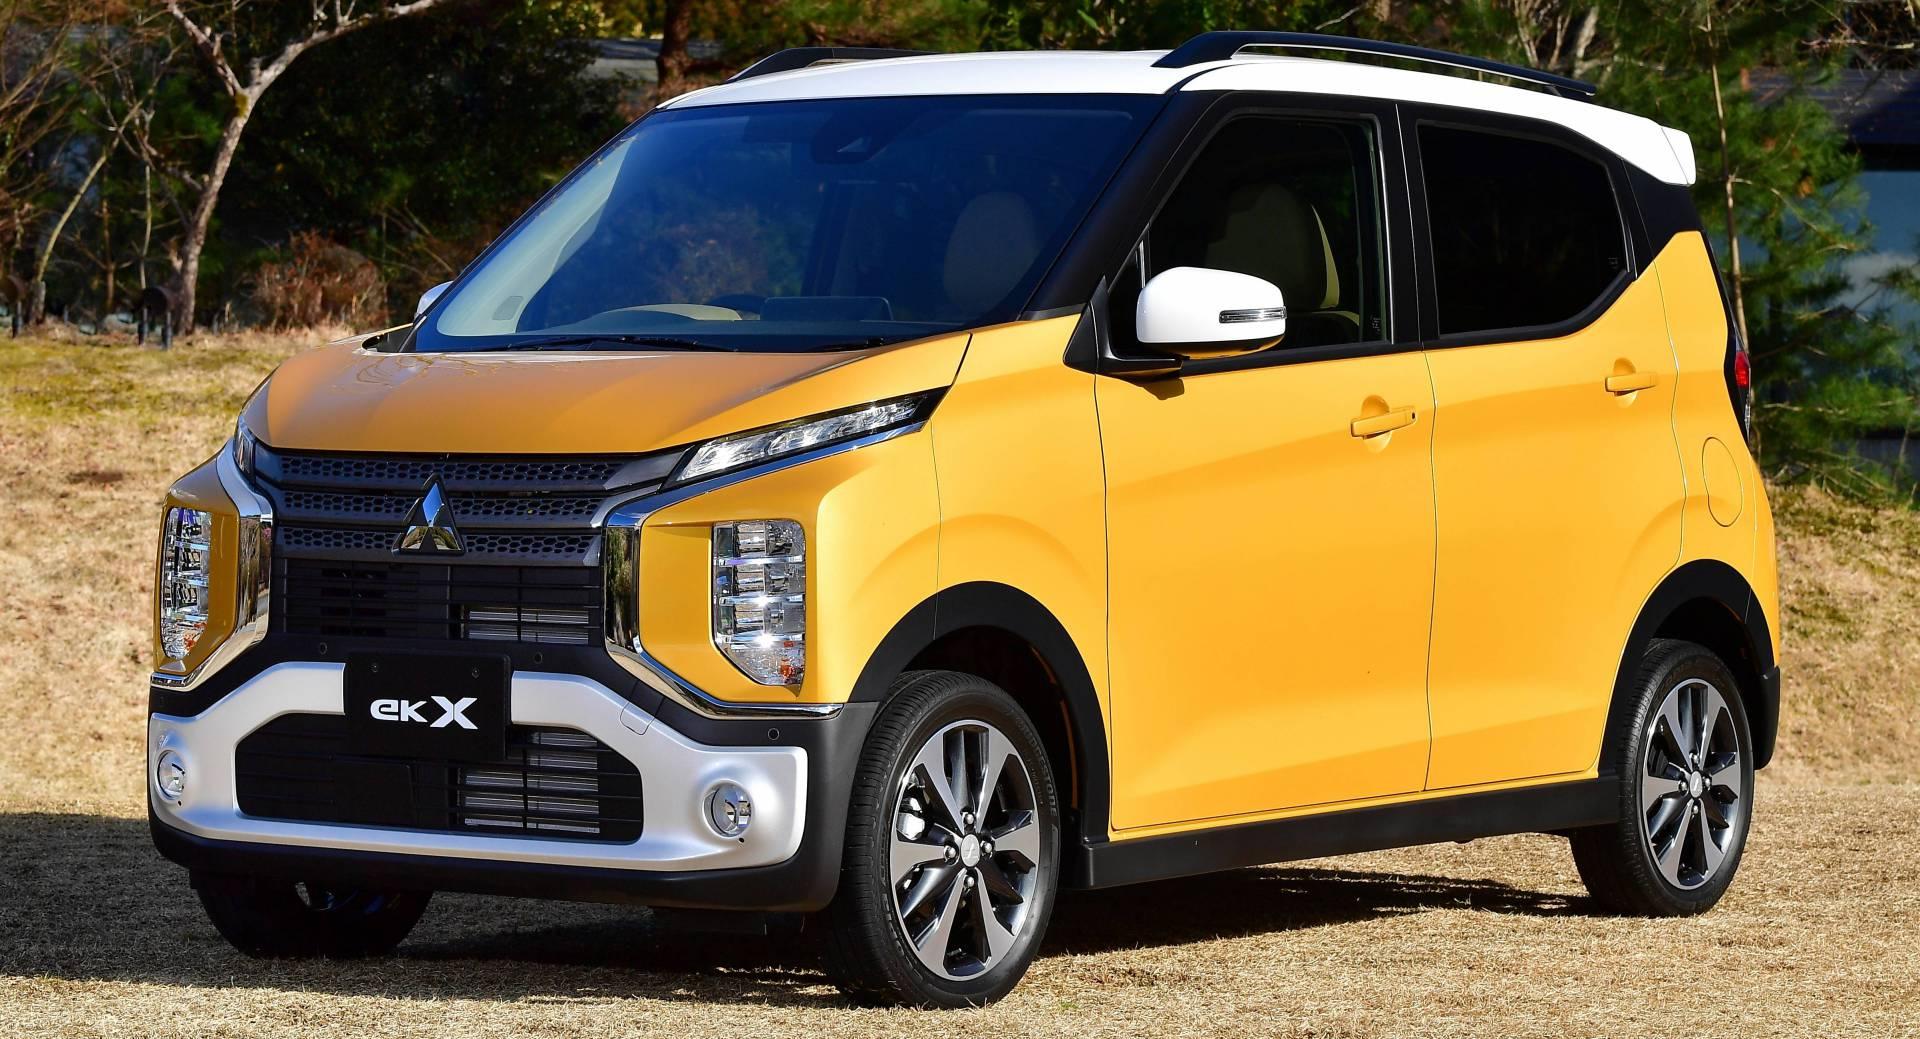 2019 Mitsubishi eK Wagon And eK X Kei Cars Detailed As Sales Begin